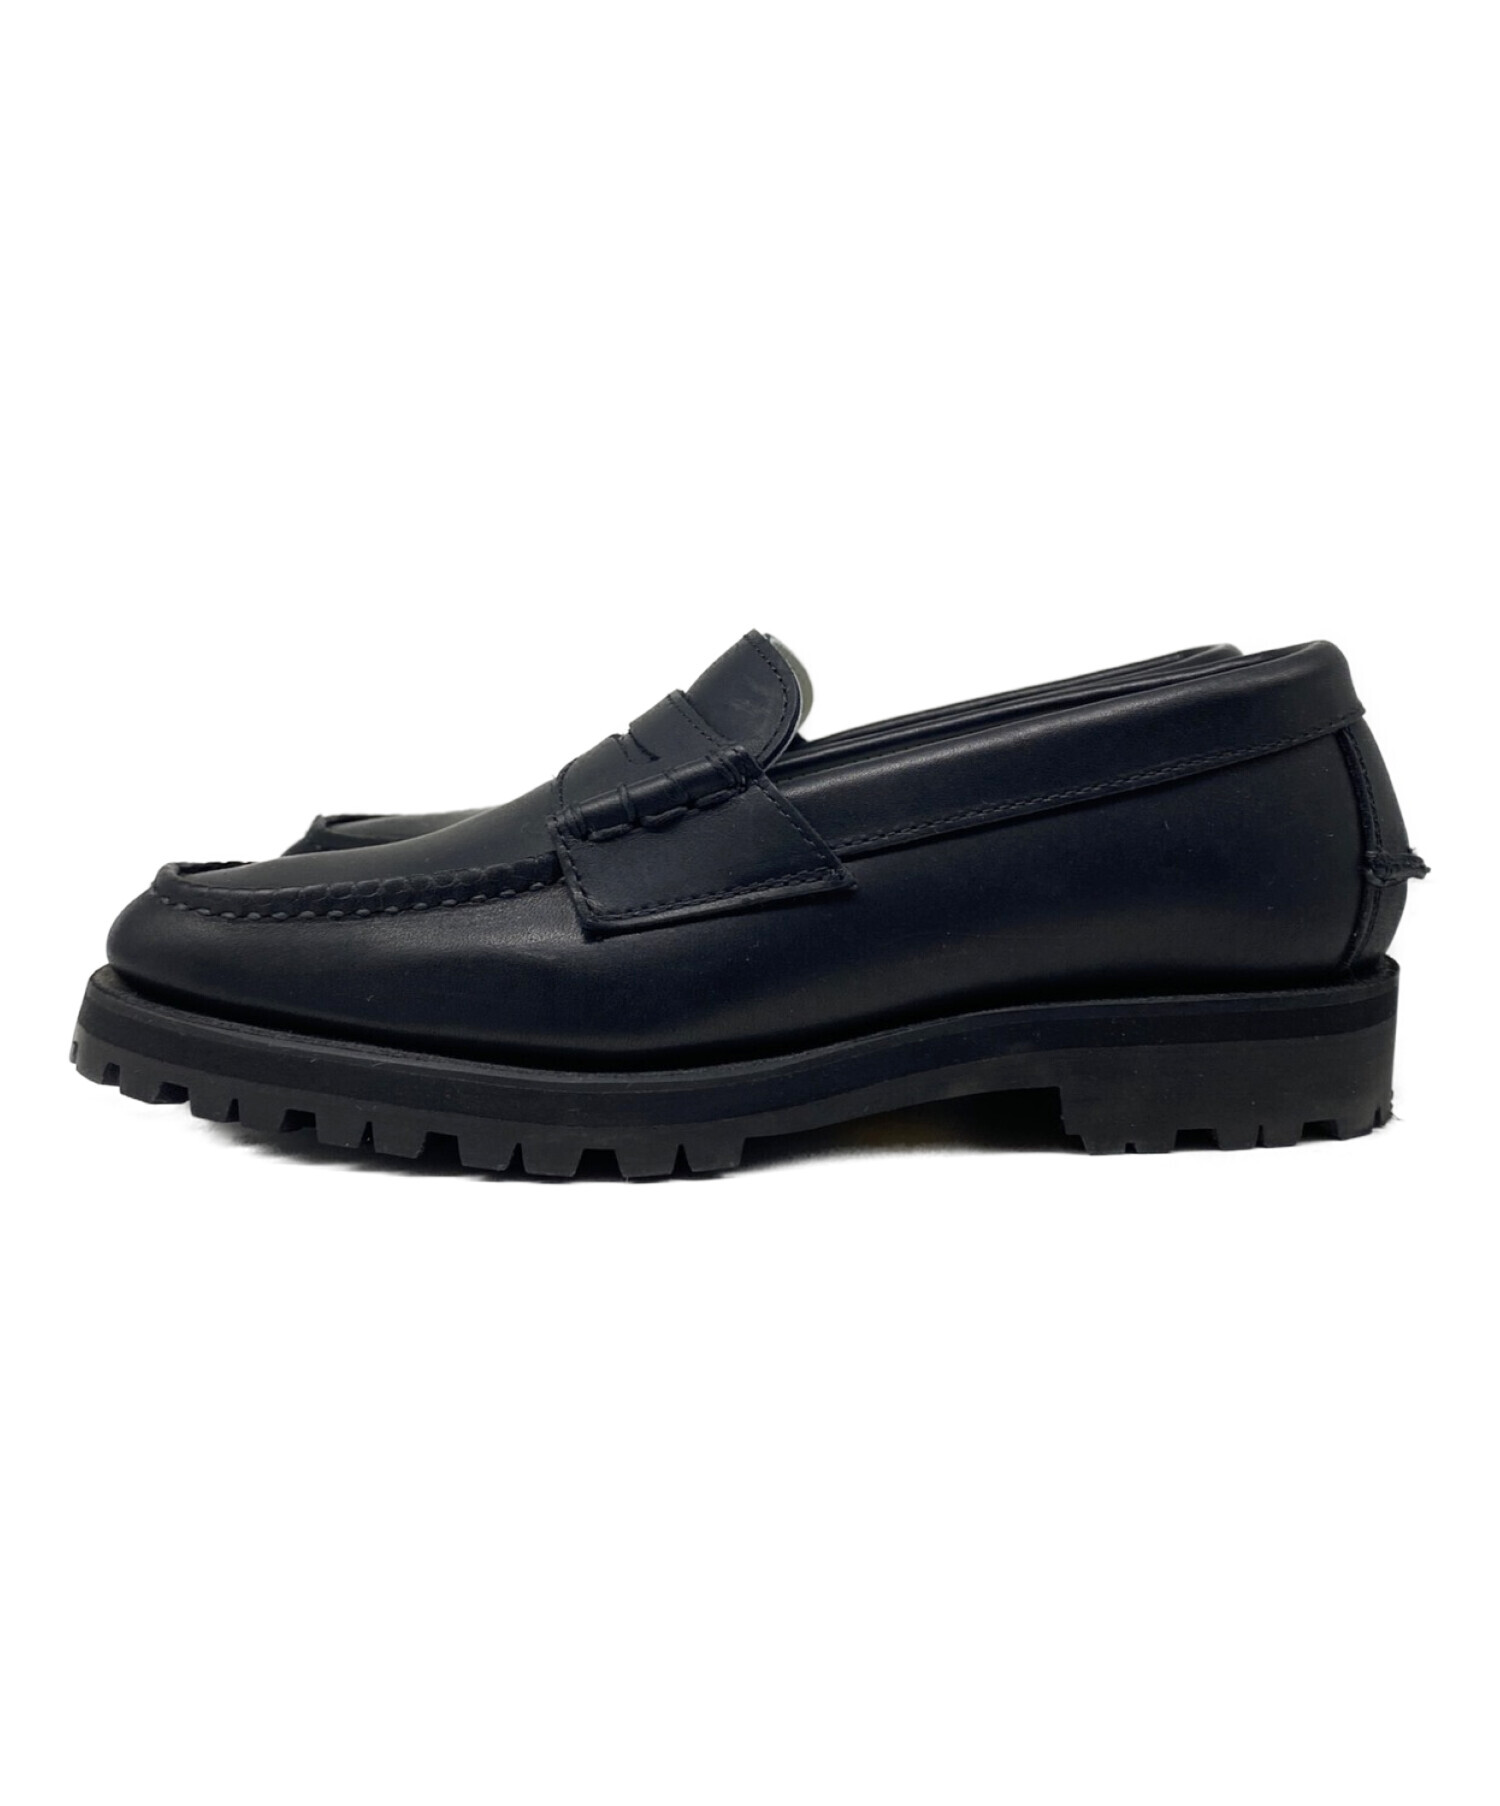 SUEDE BLACK REGAL Shoe \u0026 Co. for LENO